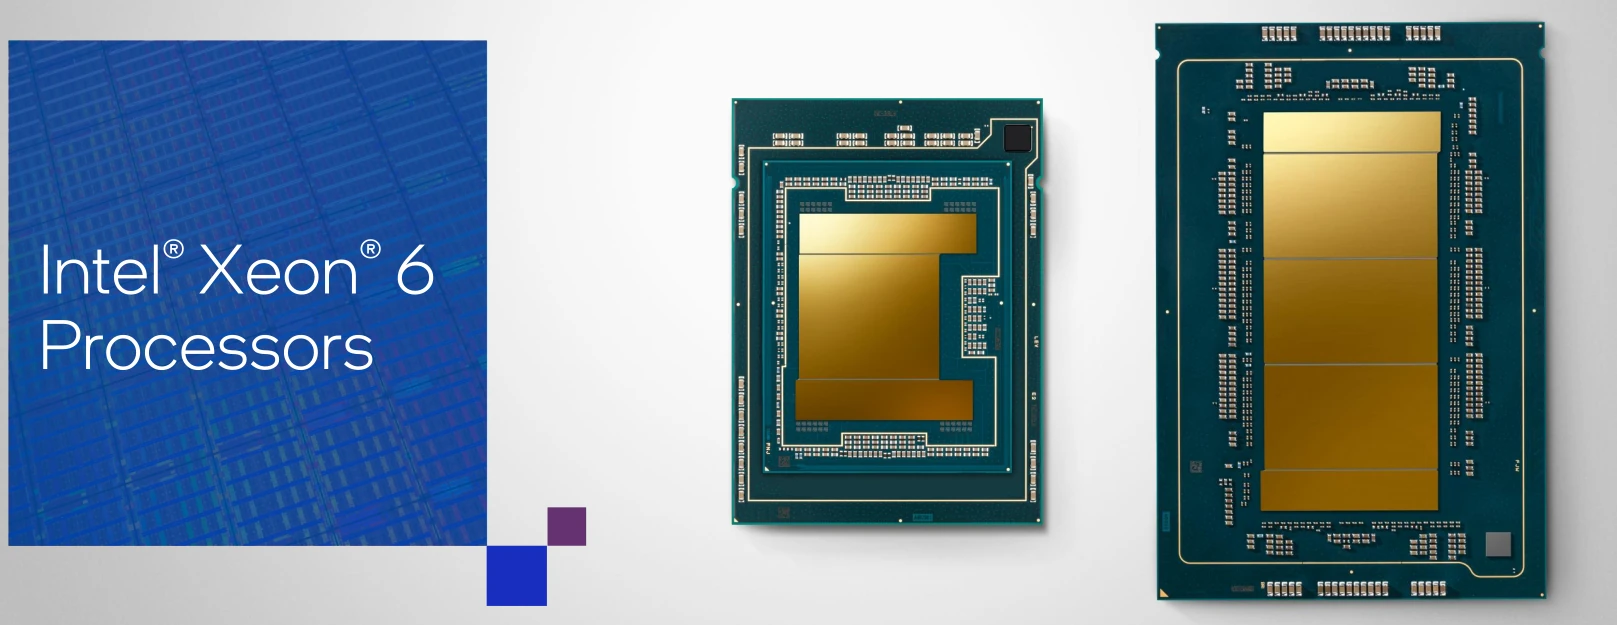 Intel Xeon6 Processors